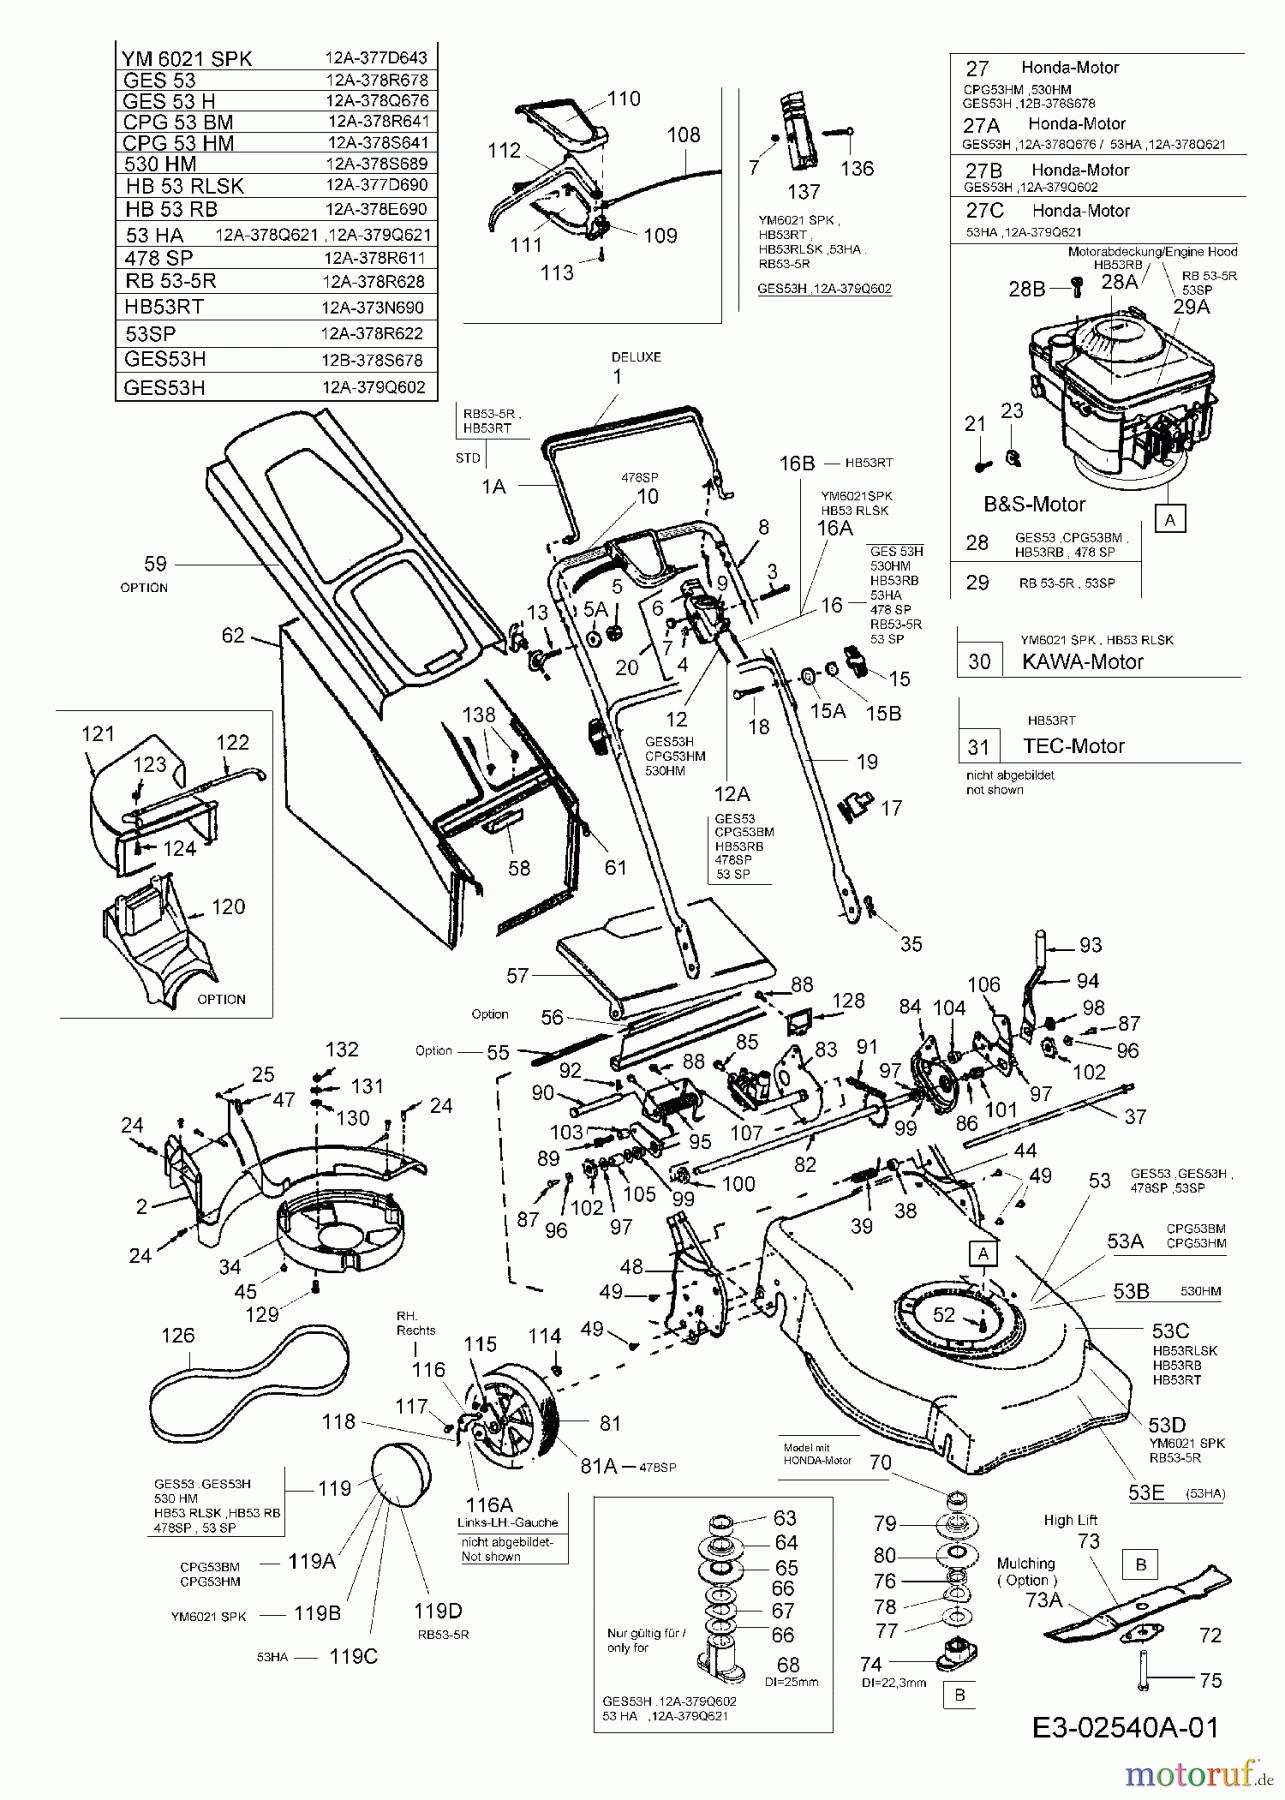  Gutbrod Motormäher mit Antrieb HB 53 RT 12A-373N690  (2005) Grundgerät